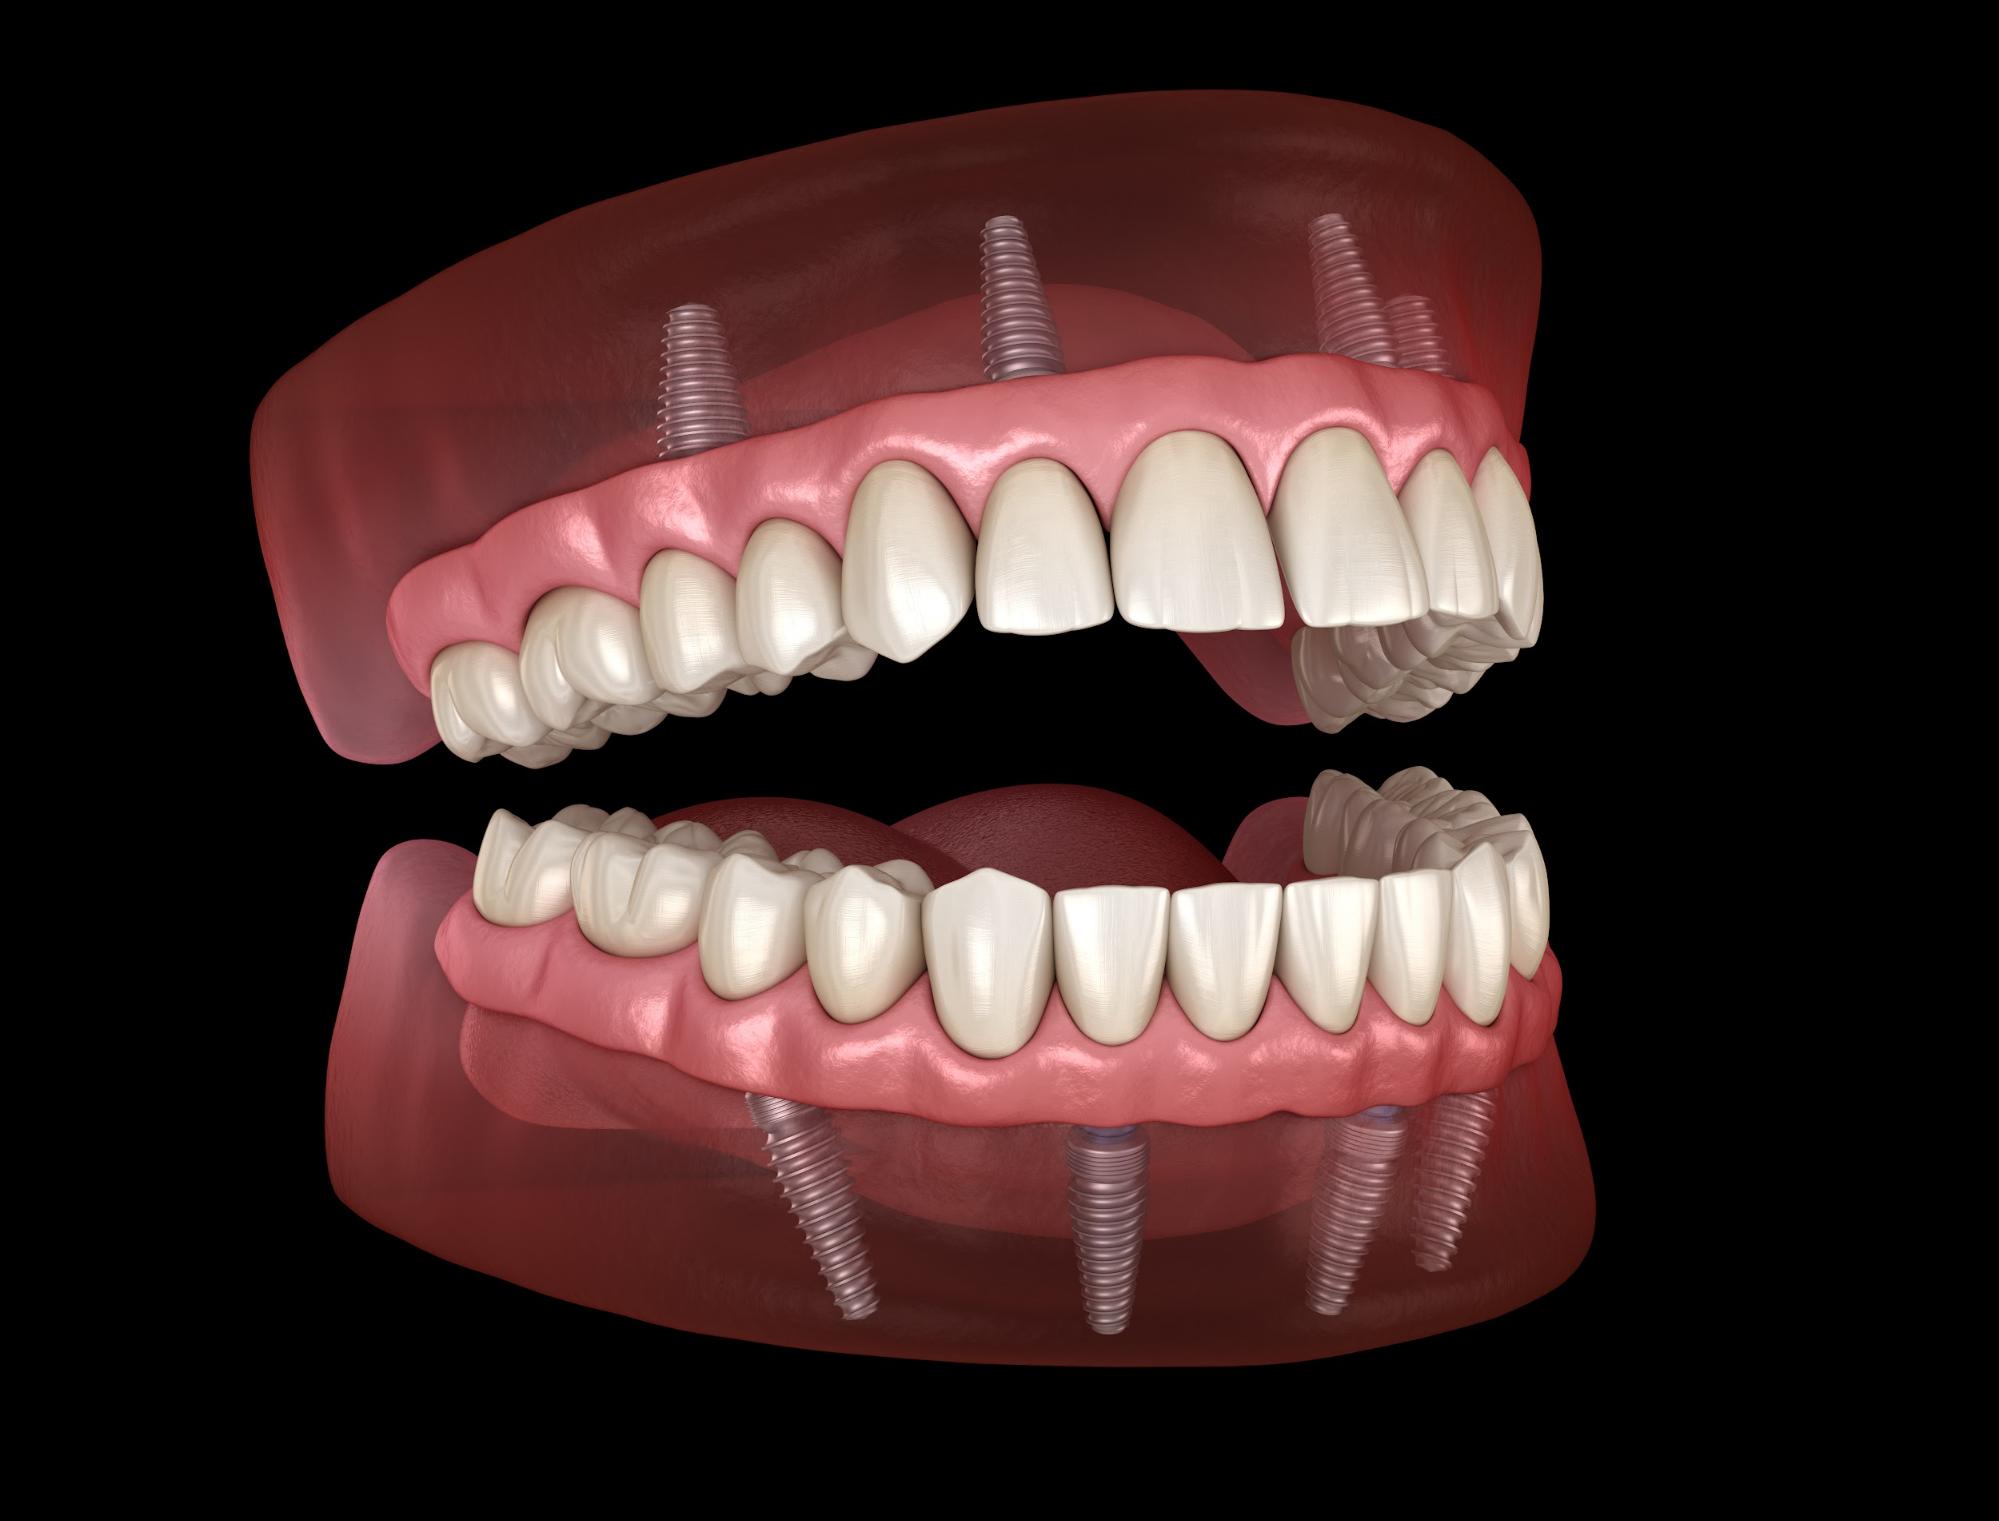 The link between bone grafts and dental implants